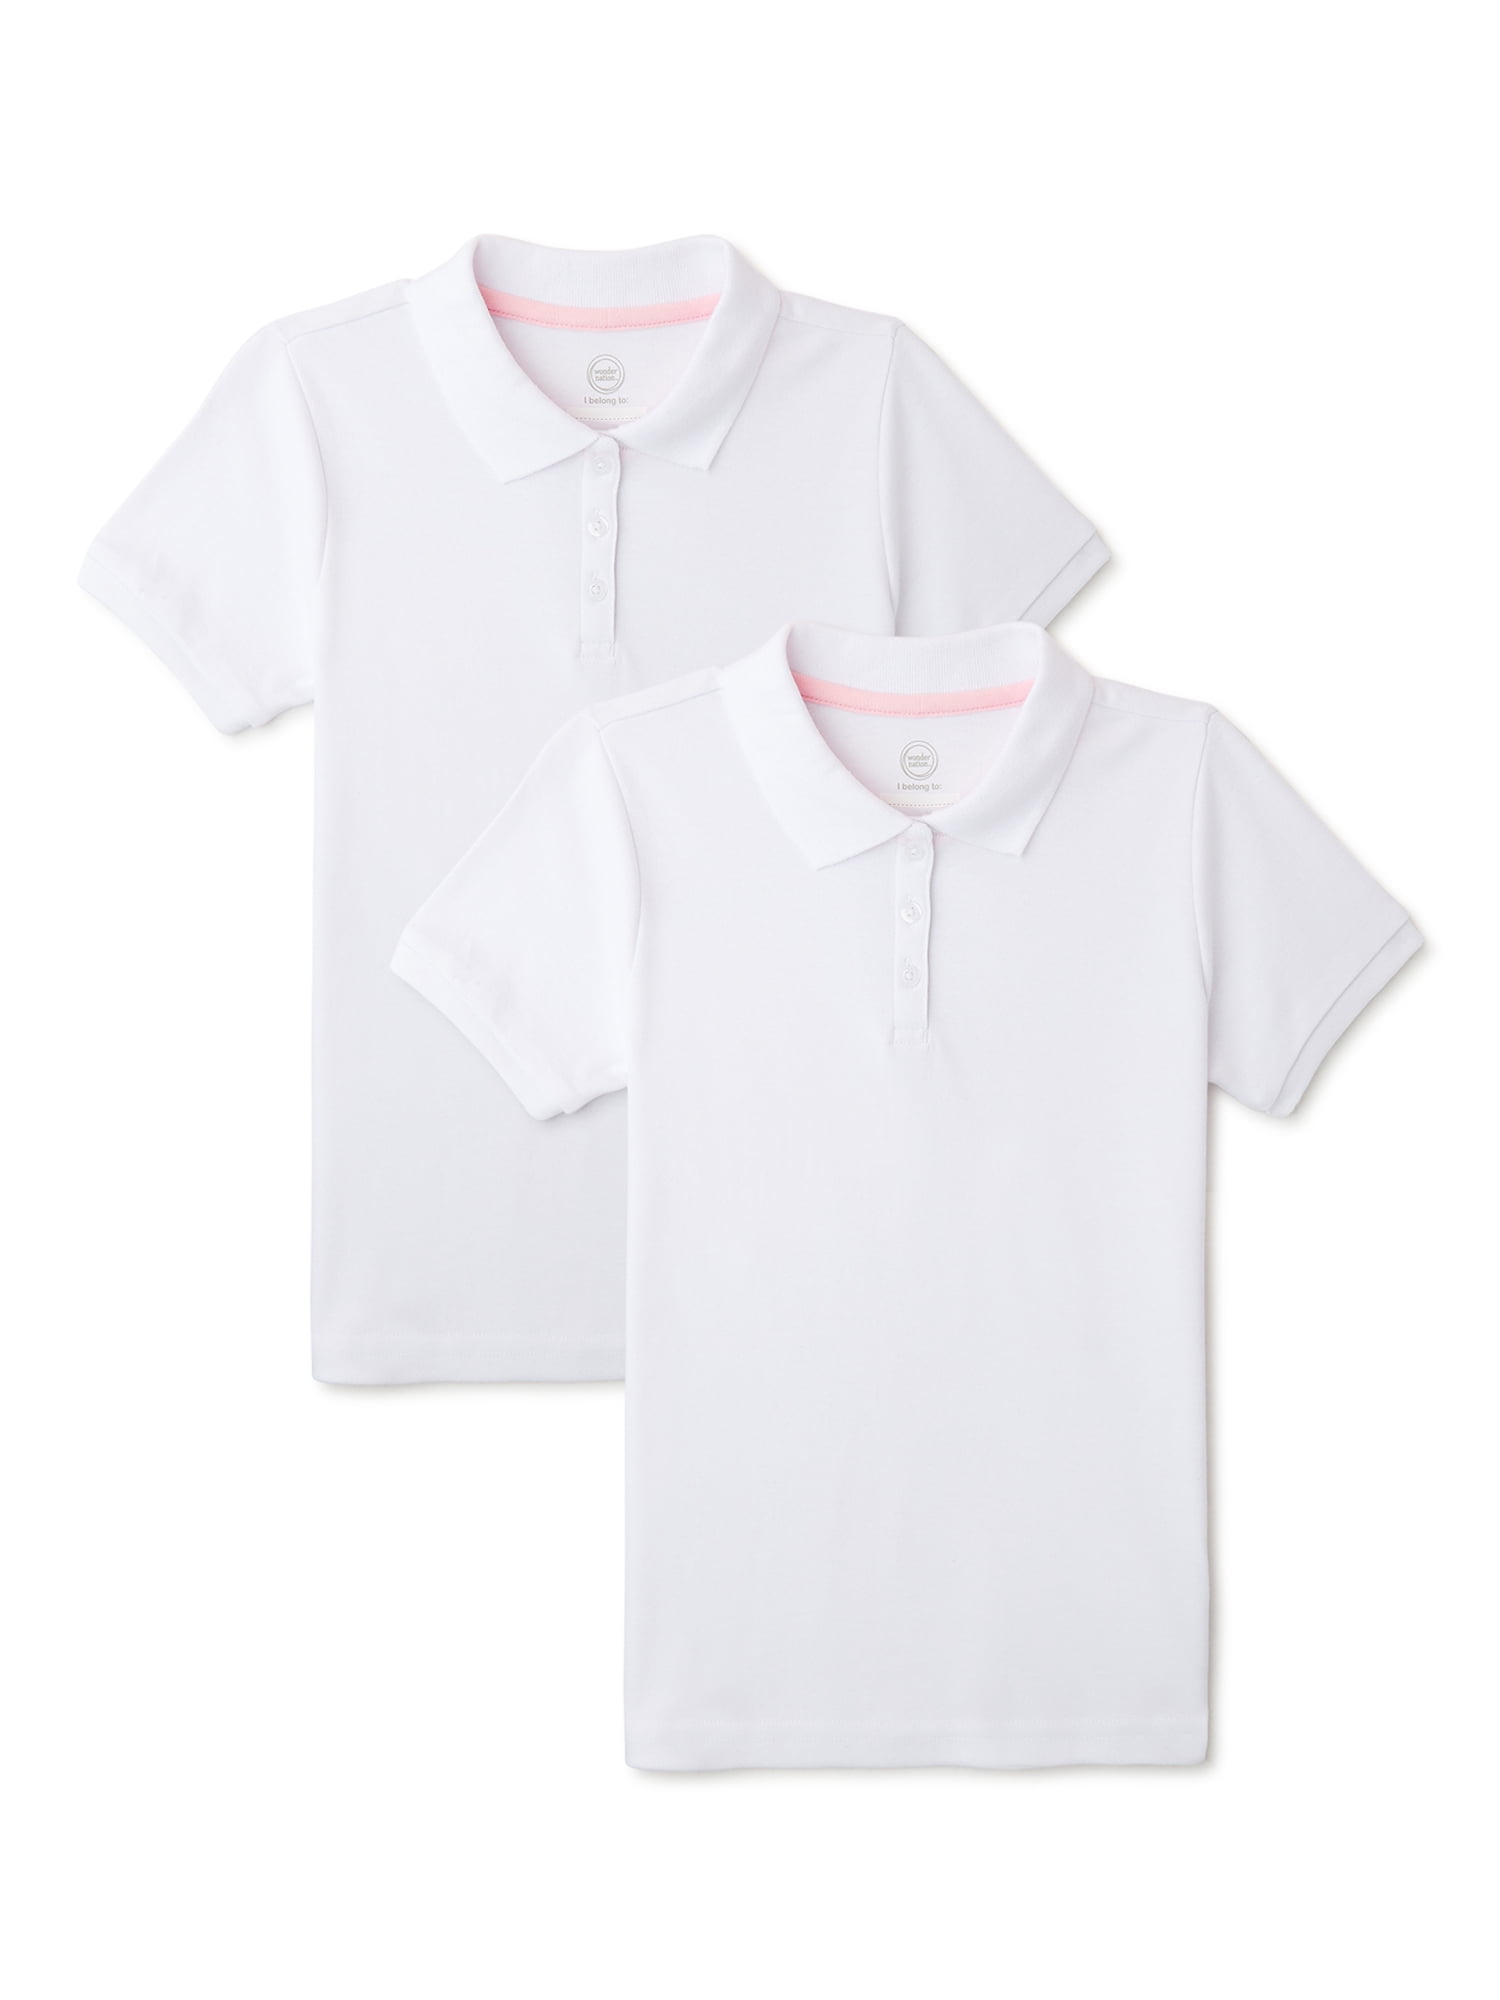 Boys School 2 Pack Short Sleeve Shirts White sizes Age 3-16 Uniform 